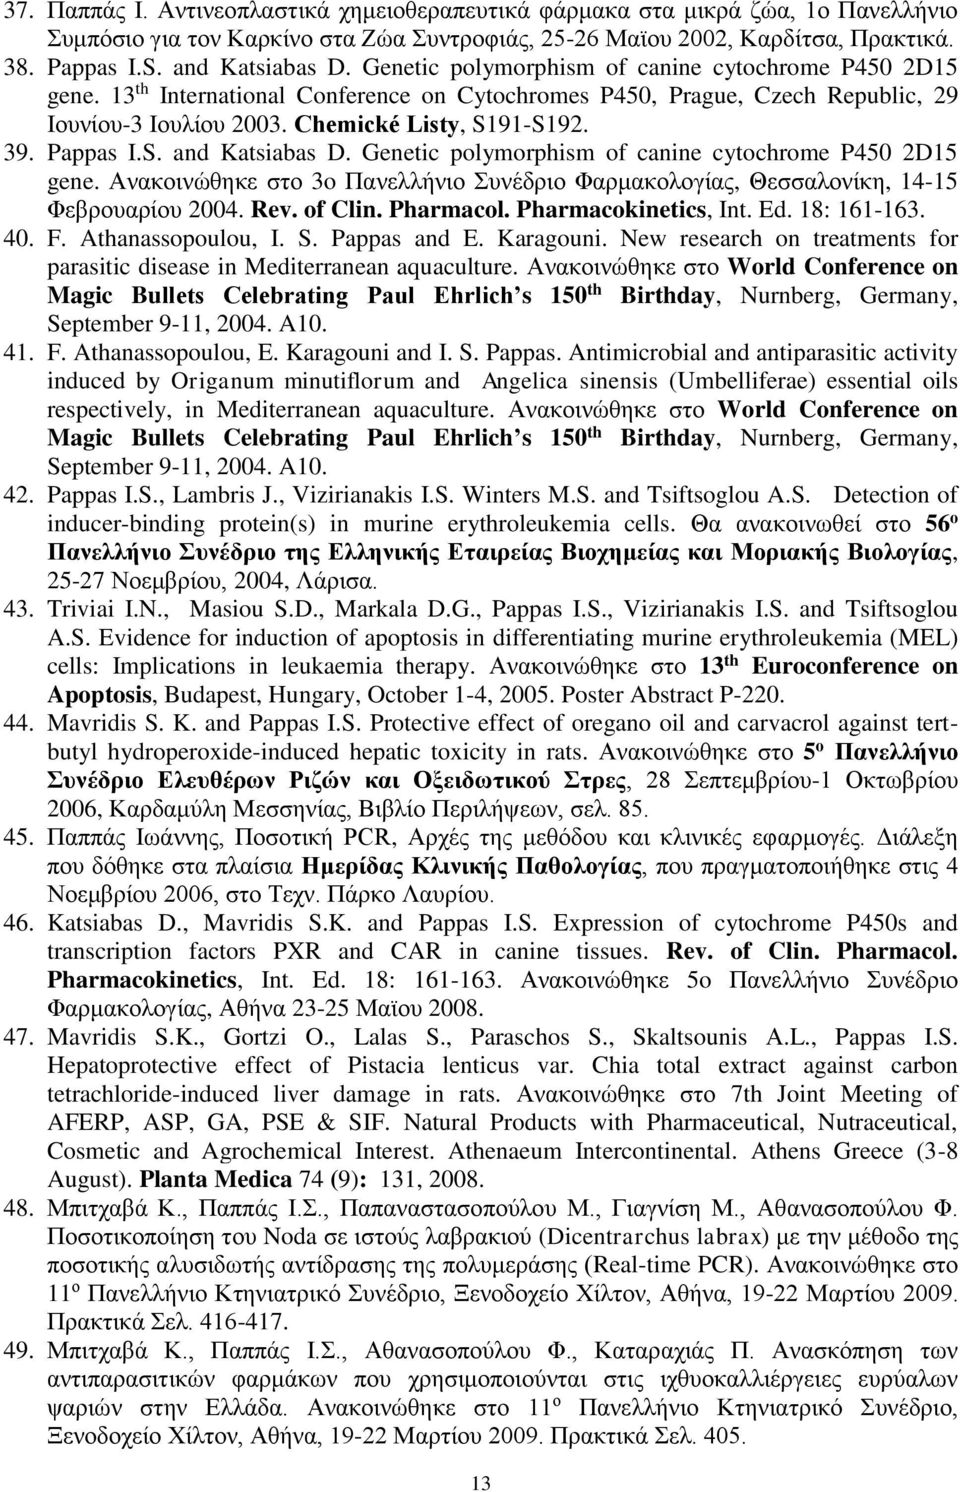 Pappas I.S. and Katsiabas D. Genetic polymorphism of canine cytochrome P450 2D15 gene. Ανακοινώθηκε στο 3o Πανελλήνιο Συνέδριο Φαρμακολογίας, Θεσσαλονίκη, 14-15 Φεβρουαρίου 2004. Rev. of Clin.